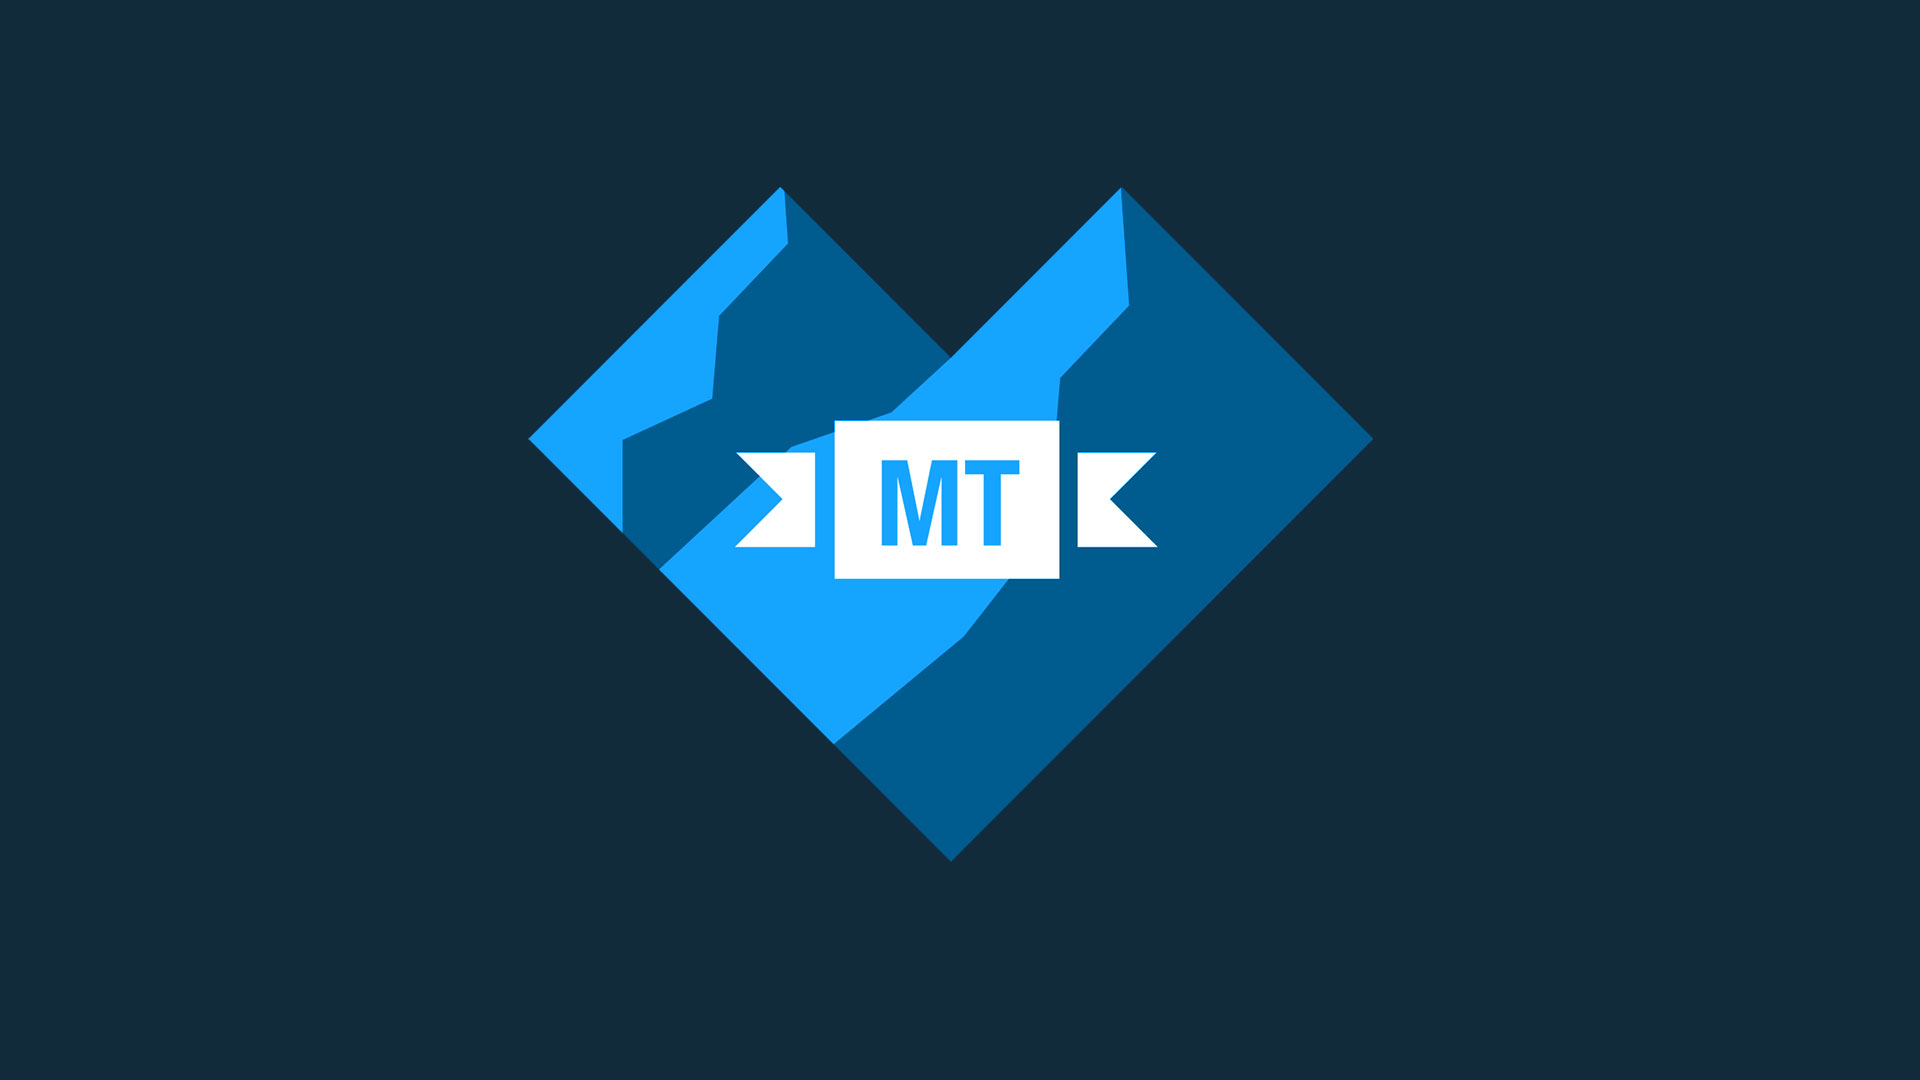 I-Love-MT-Logo-K-1920x1080